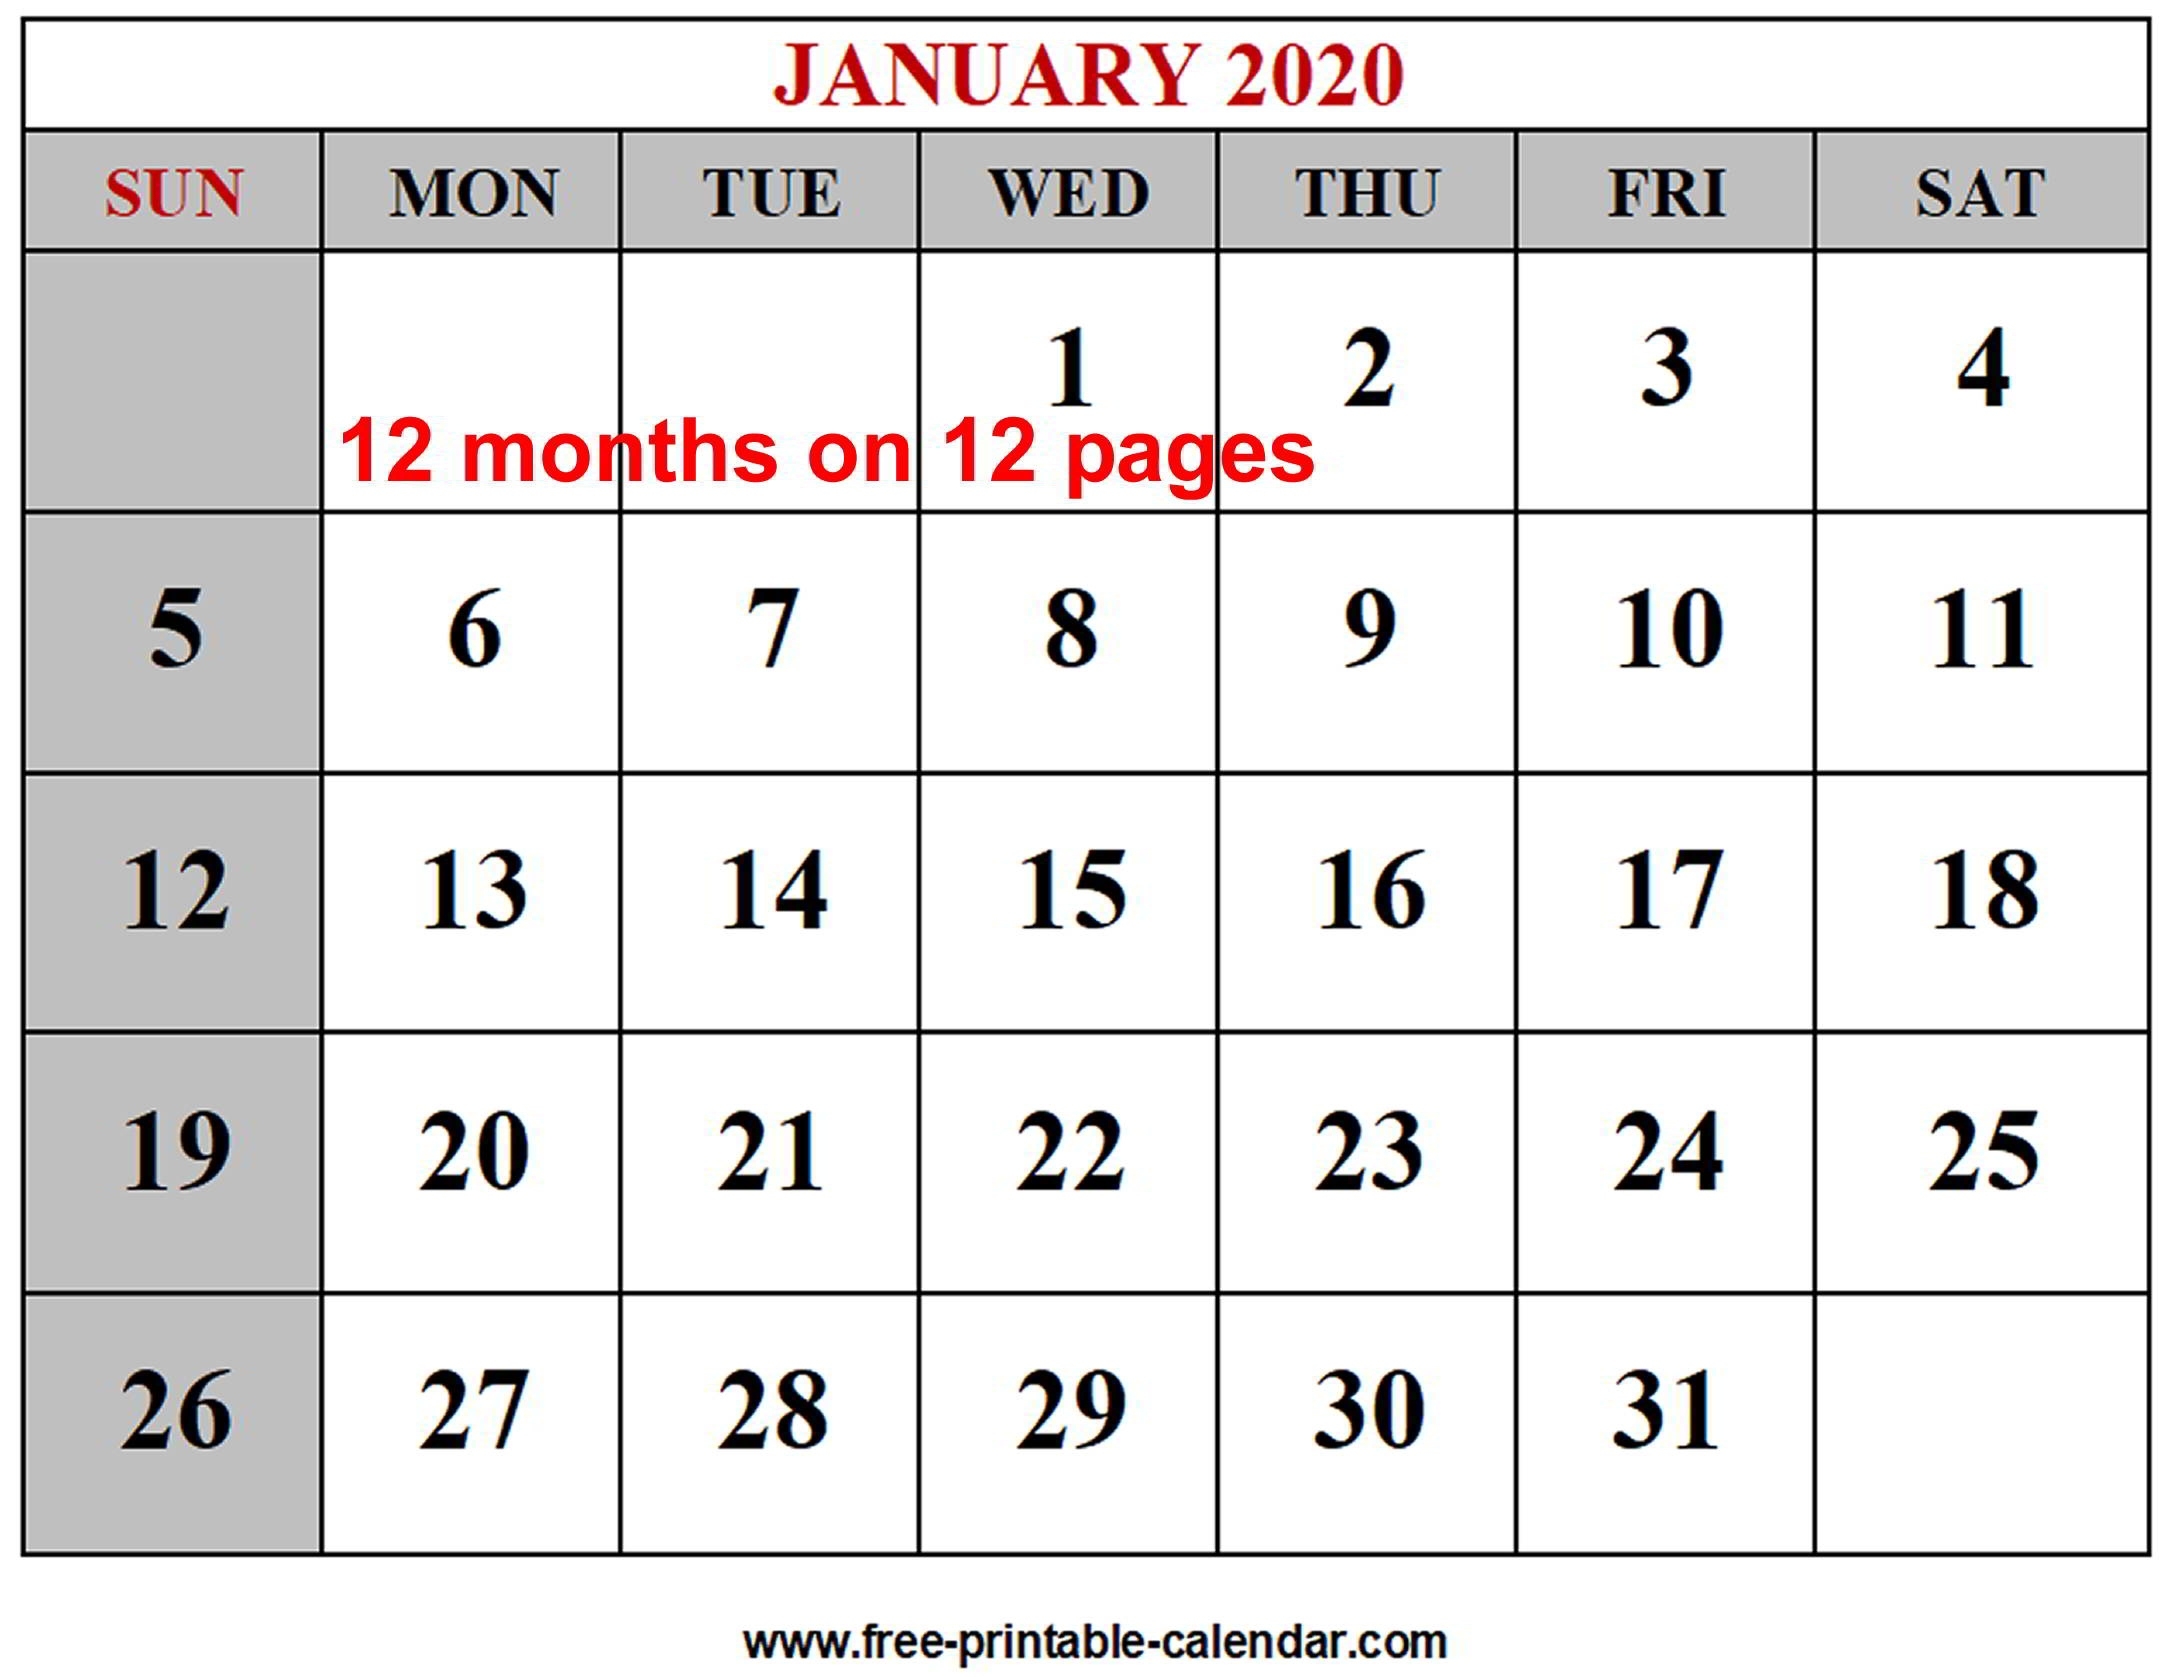 Year 2020 Calendar Templates - Free-Printable-Calendar Free Printable Calendar Template